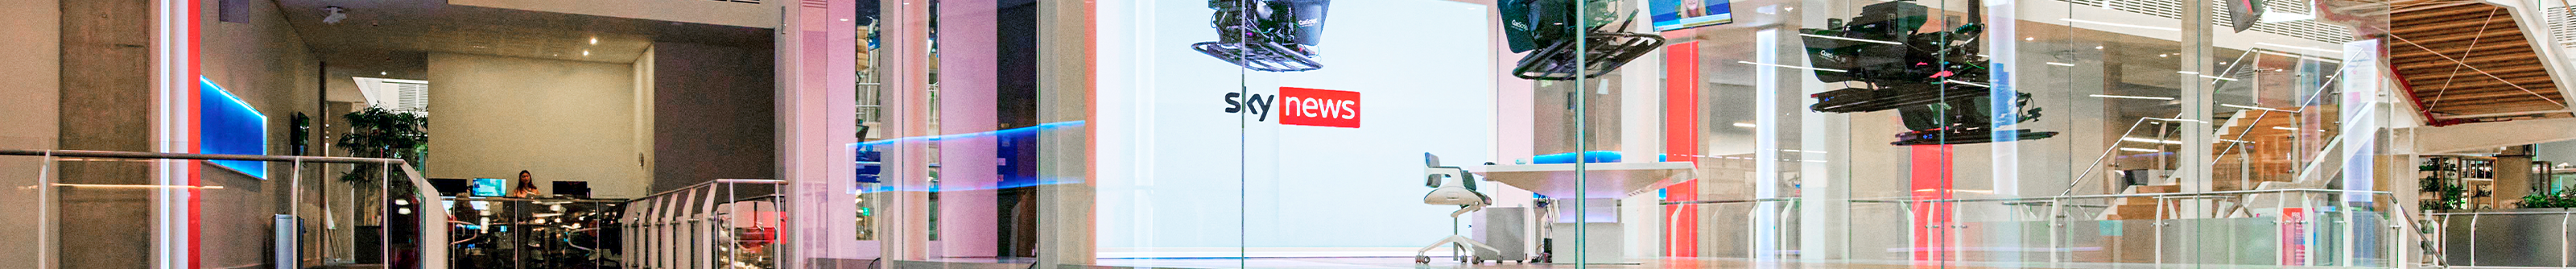 Sky News Design and Creatives profilbanner